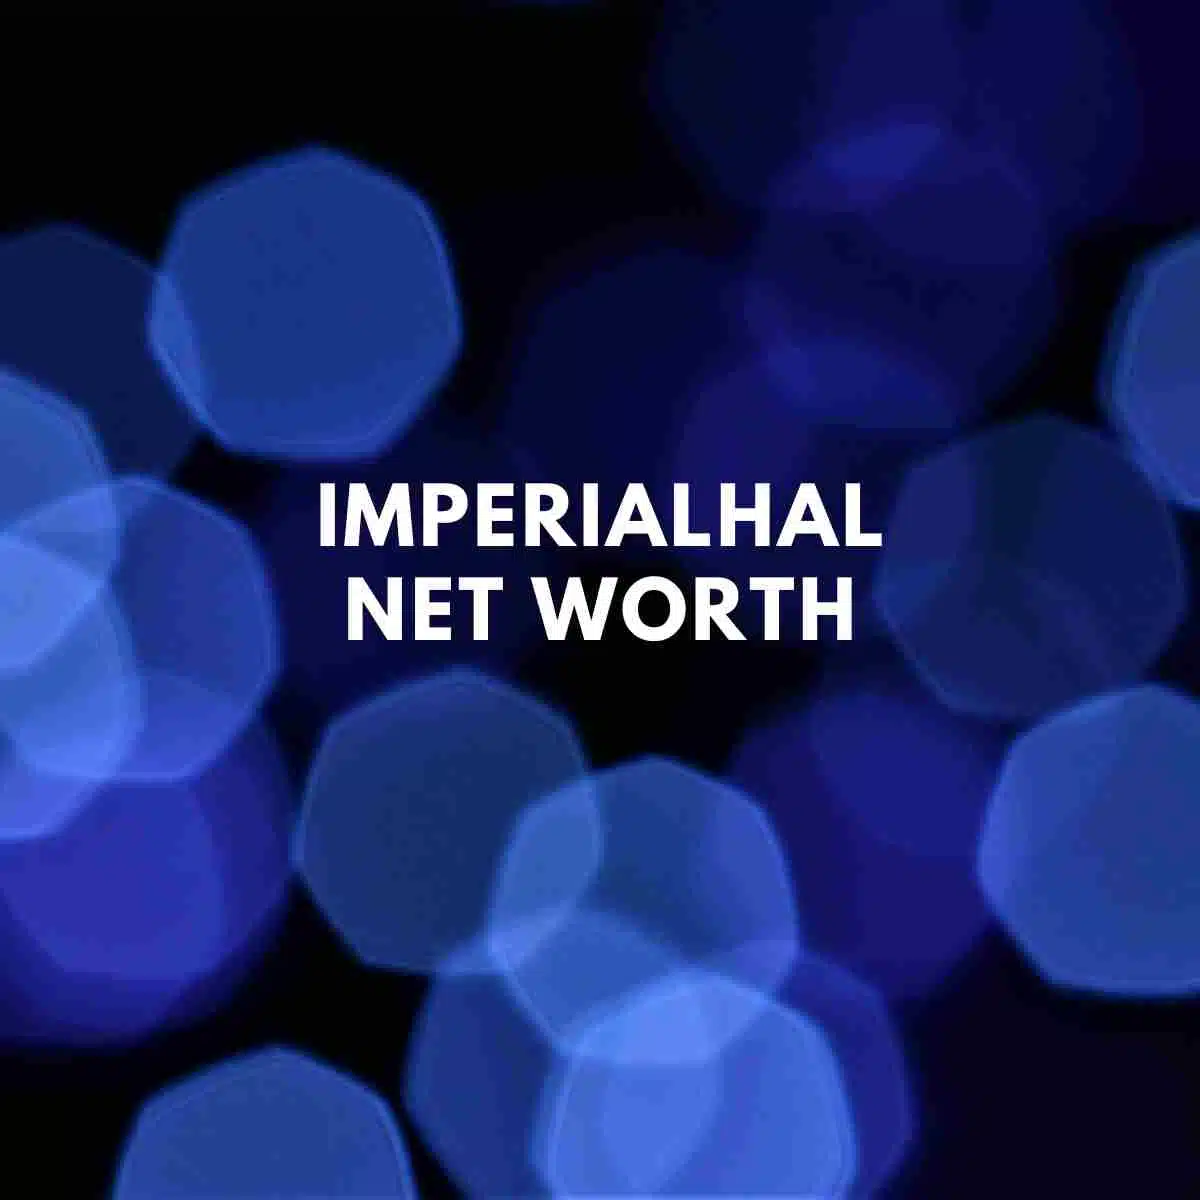 ImperialHal net worth